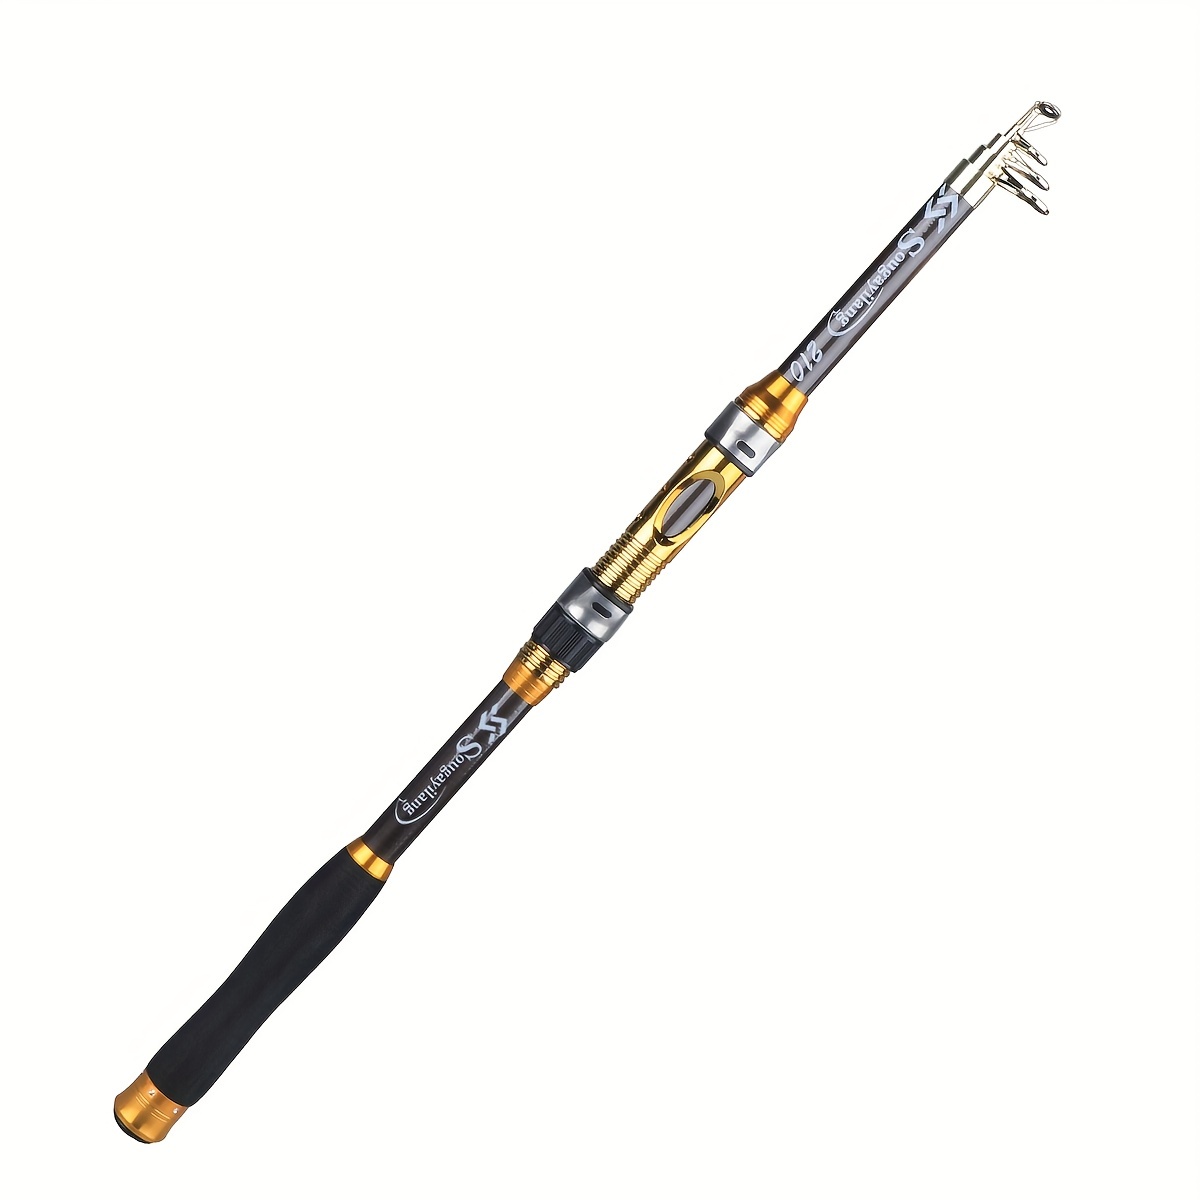 Sougayilang Telescopic Fishing Rod 1.8-2.7m Carbon Fiber 6-9